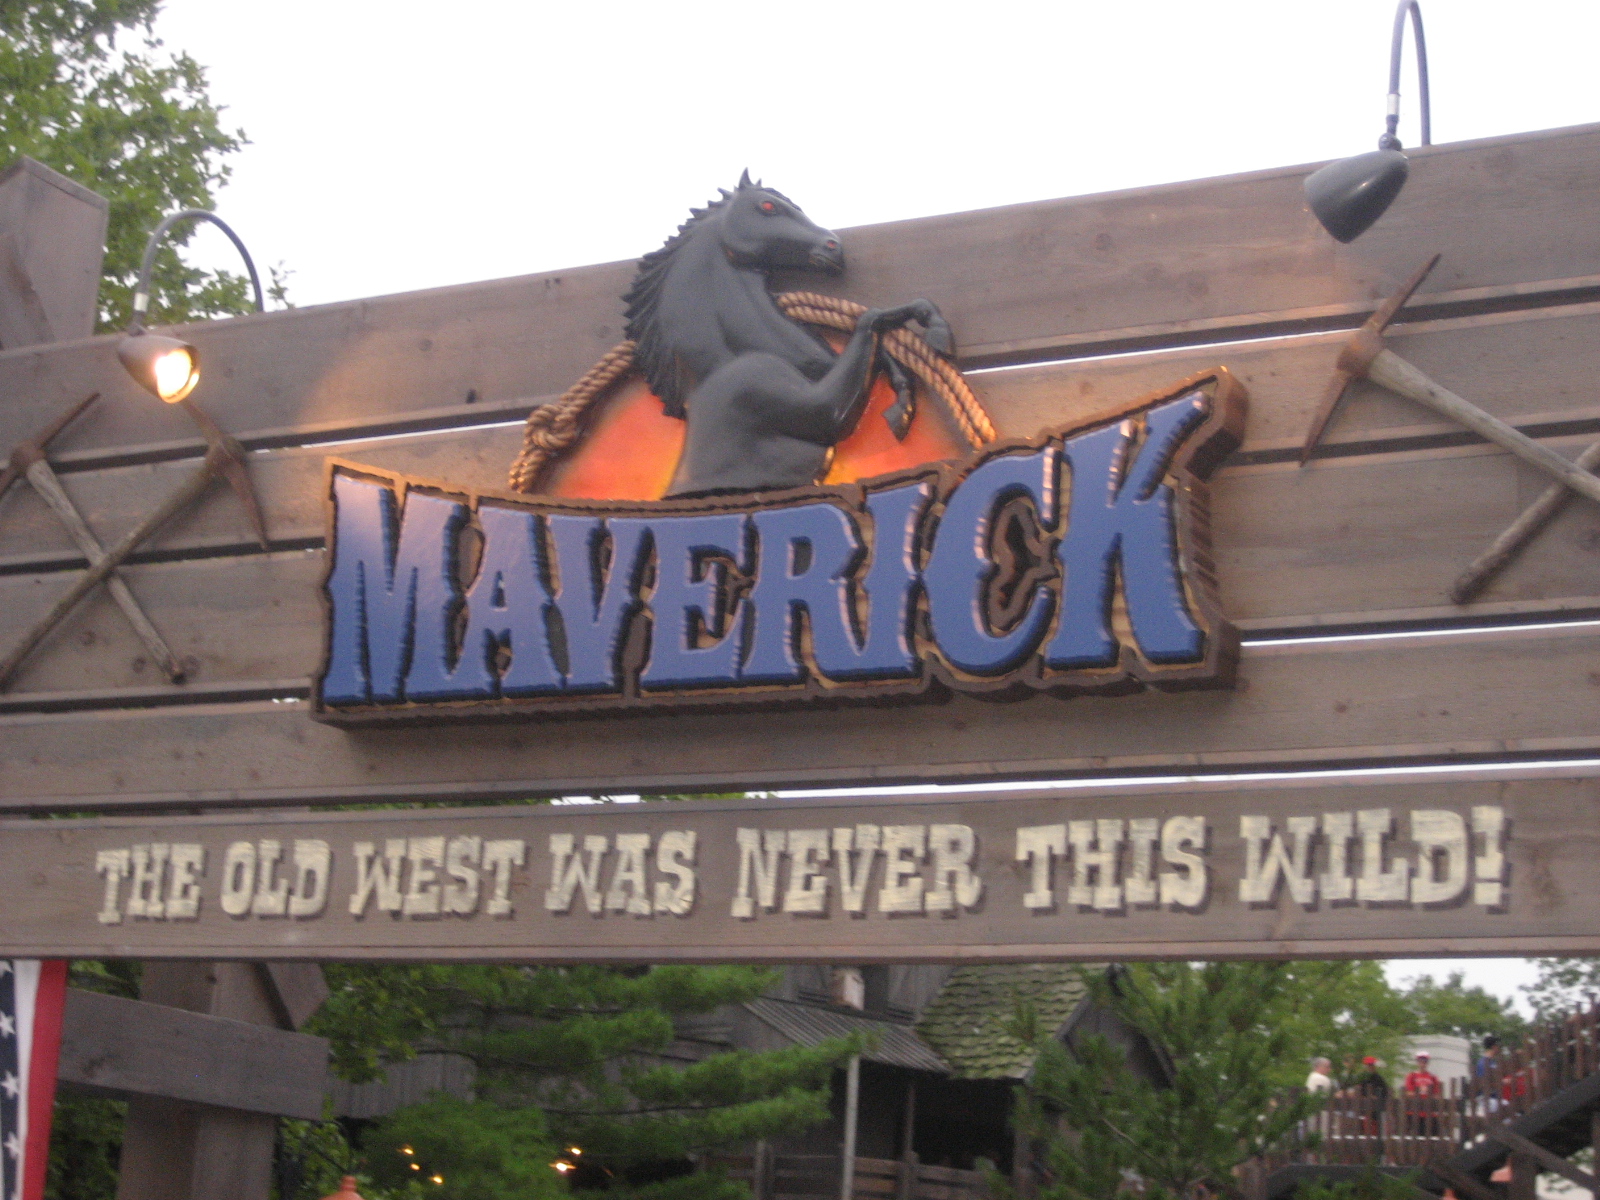 File:Maverick roller coaster sign.jpg - Wikipedia